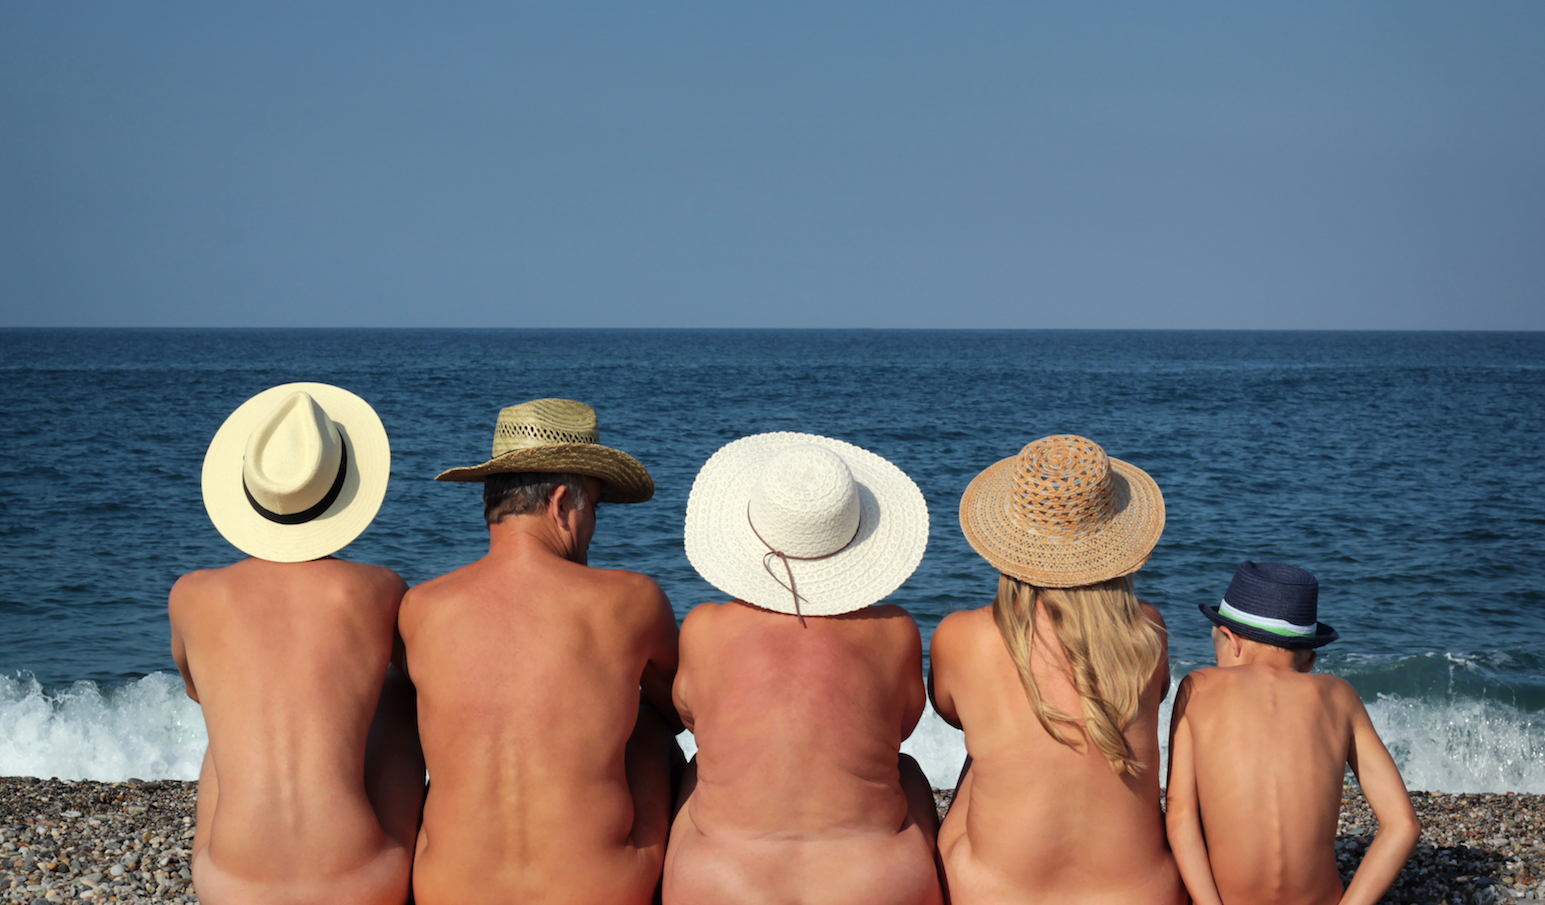 daphnee louis share australian nude beach pics photos